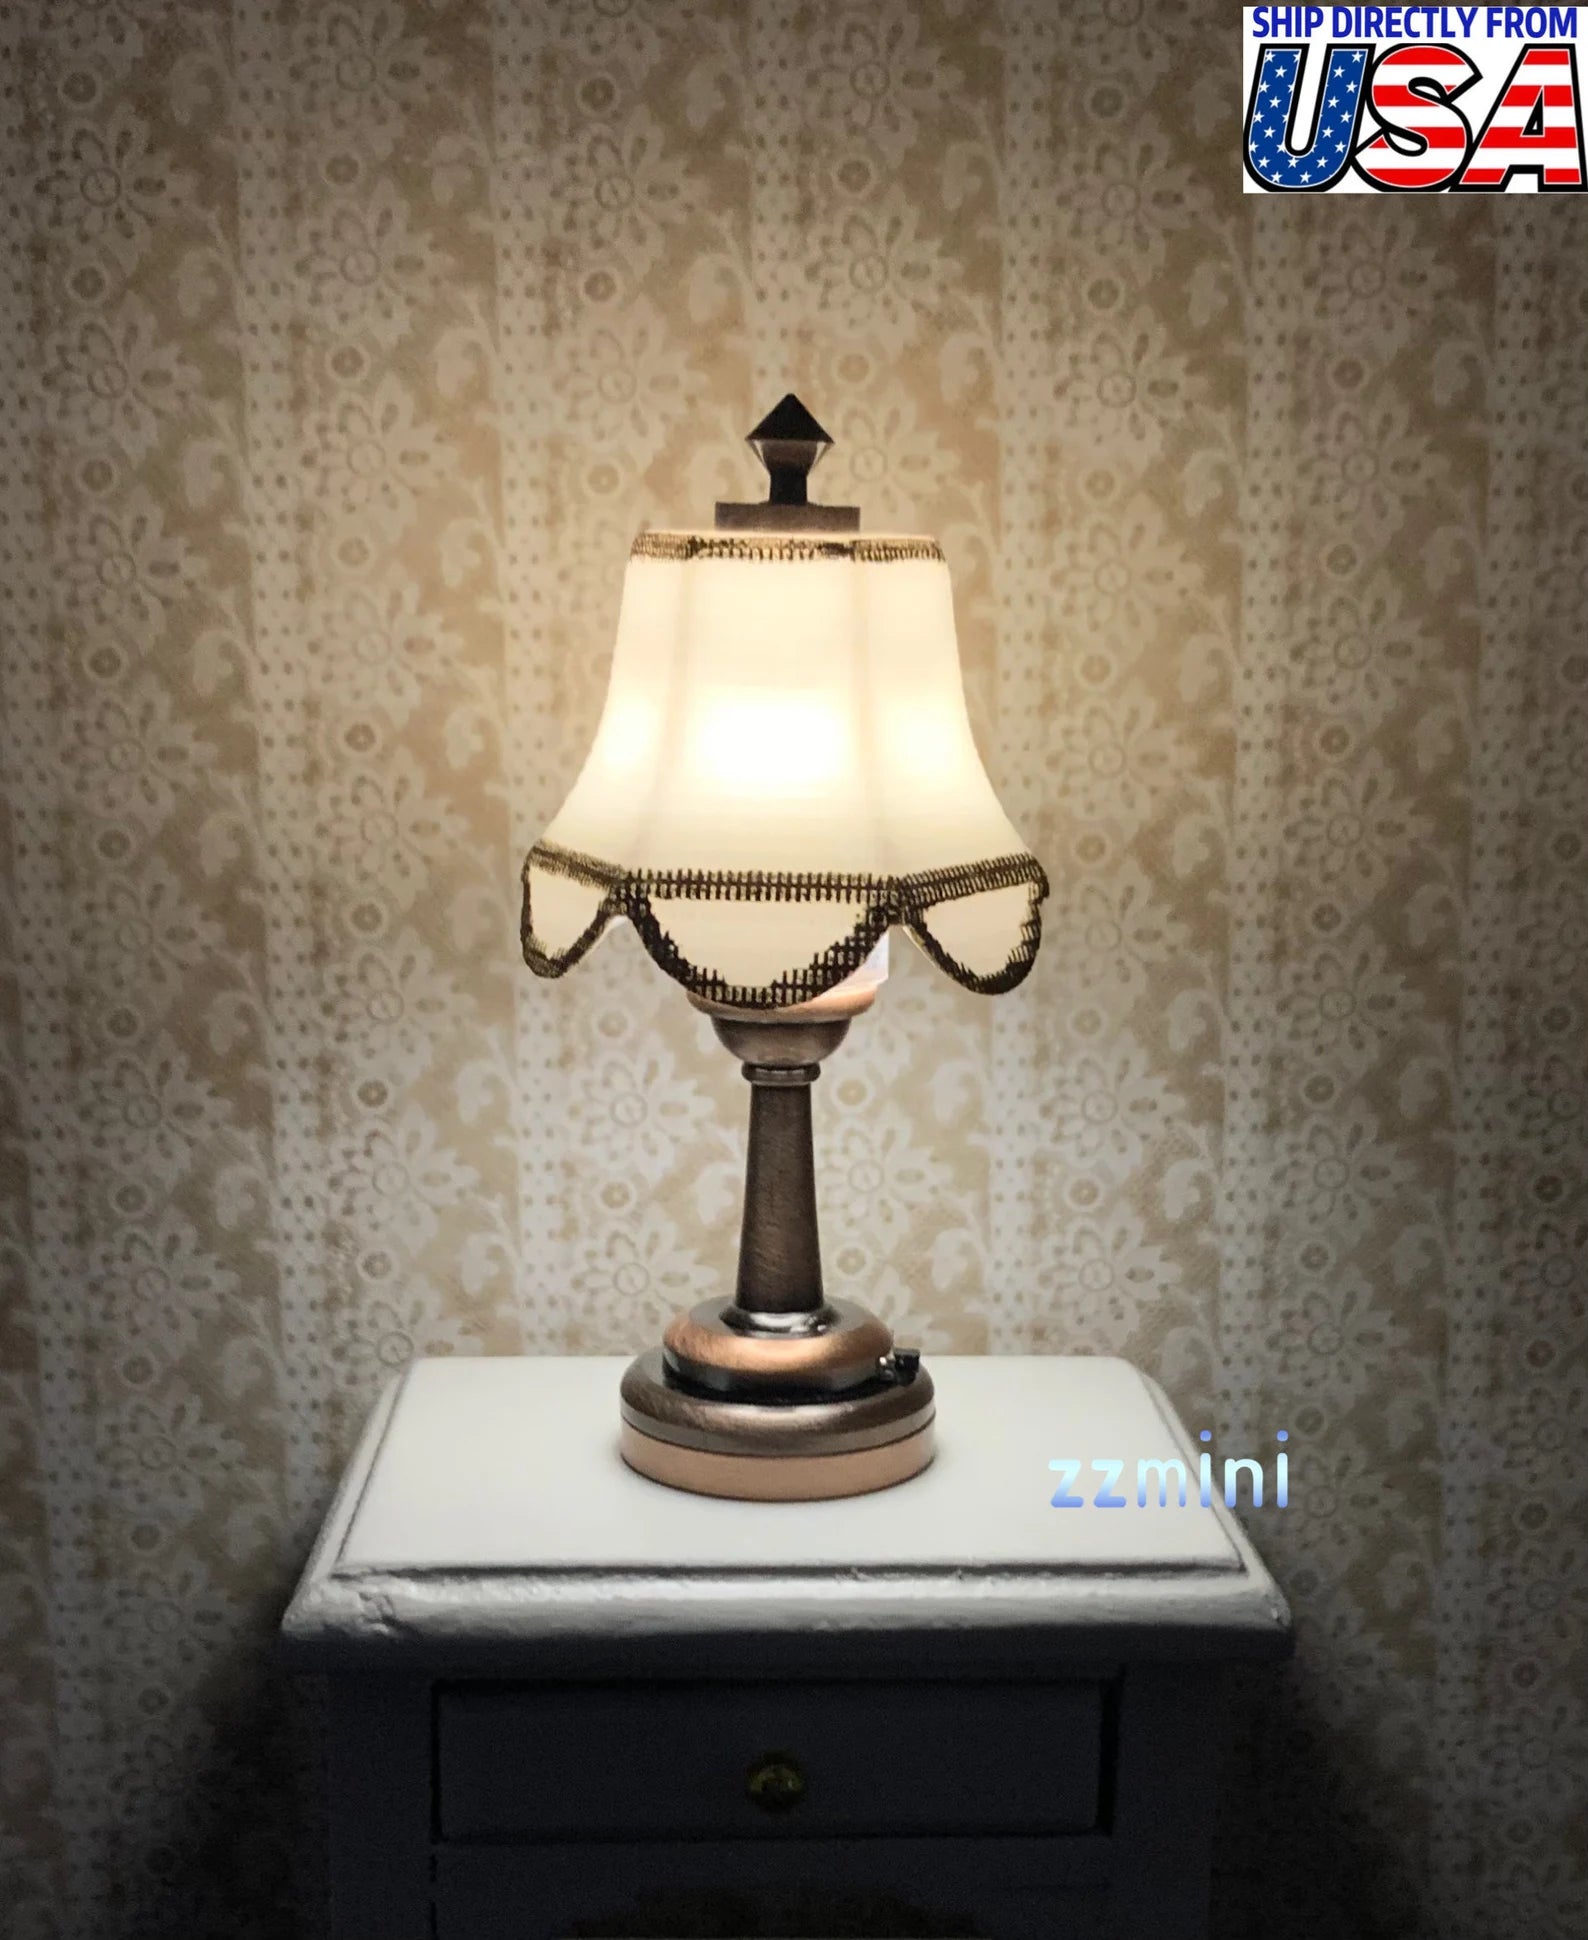 1/12 Dollhouse Miniature Table Lamp LED Light Lamp Battery Use Decoration